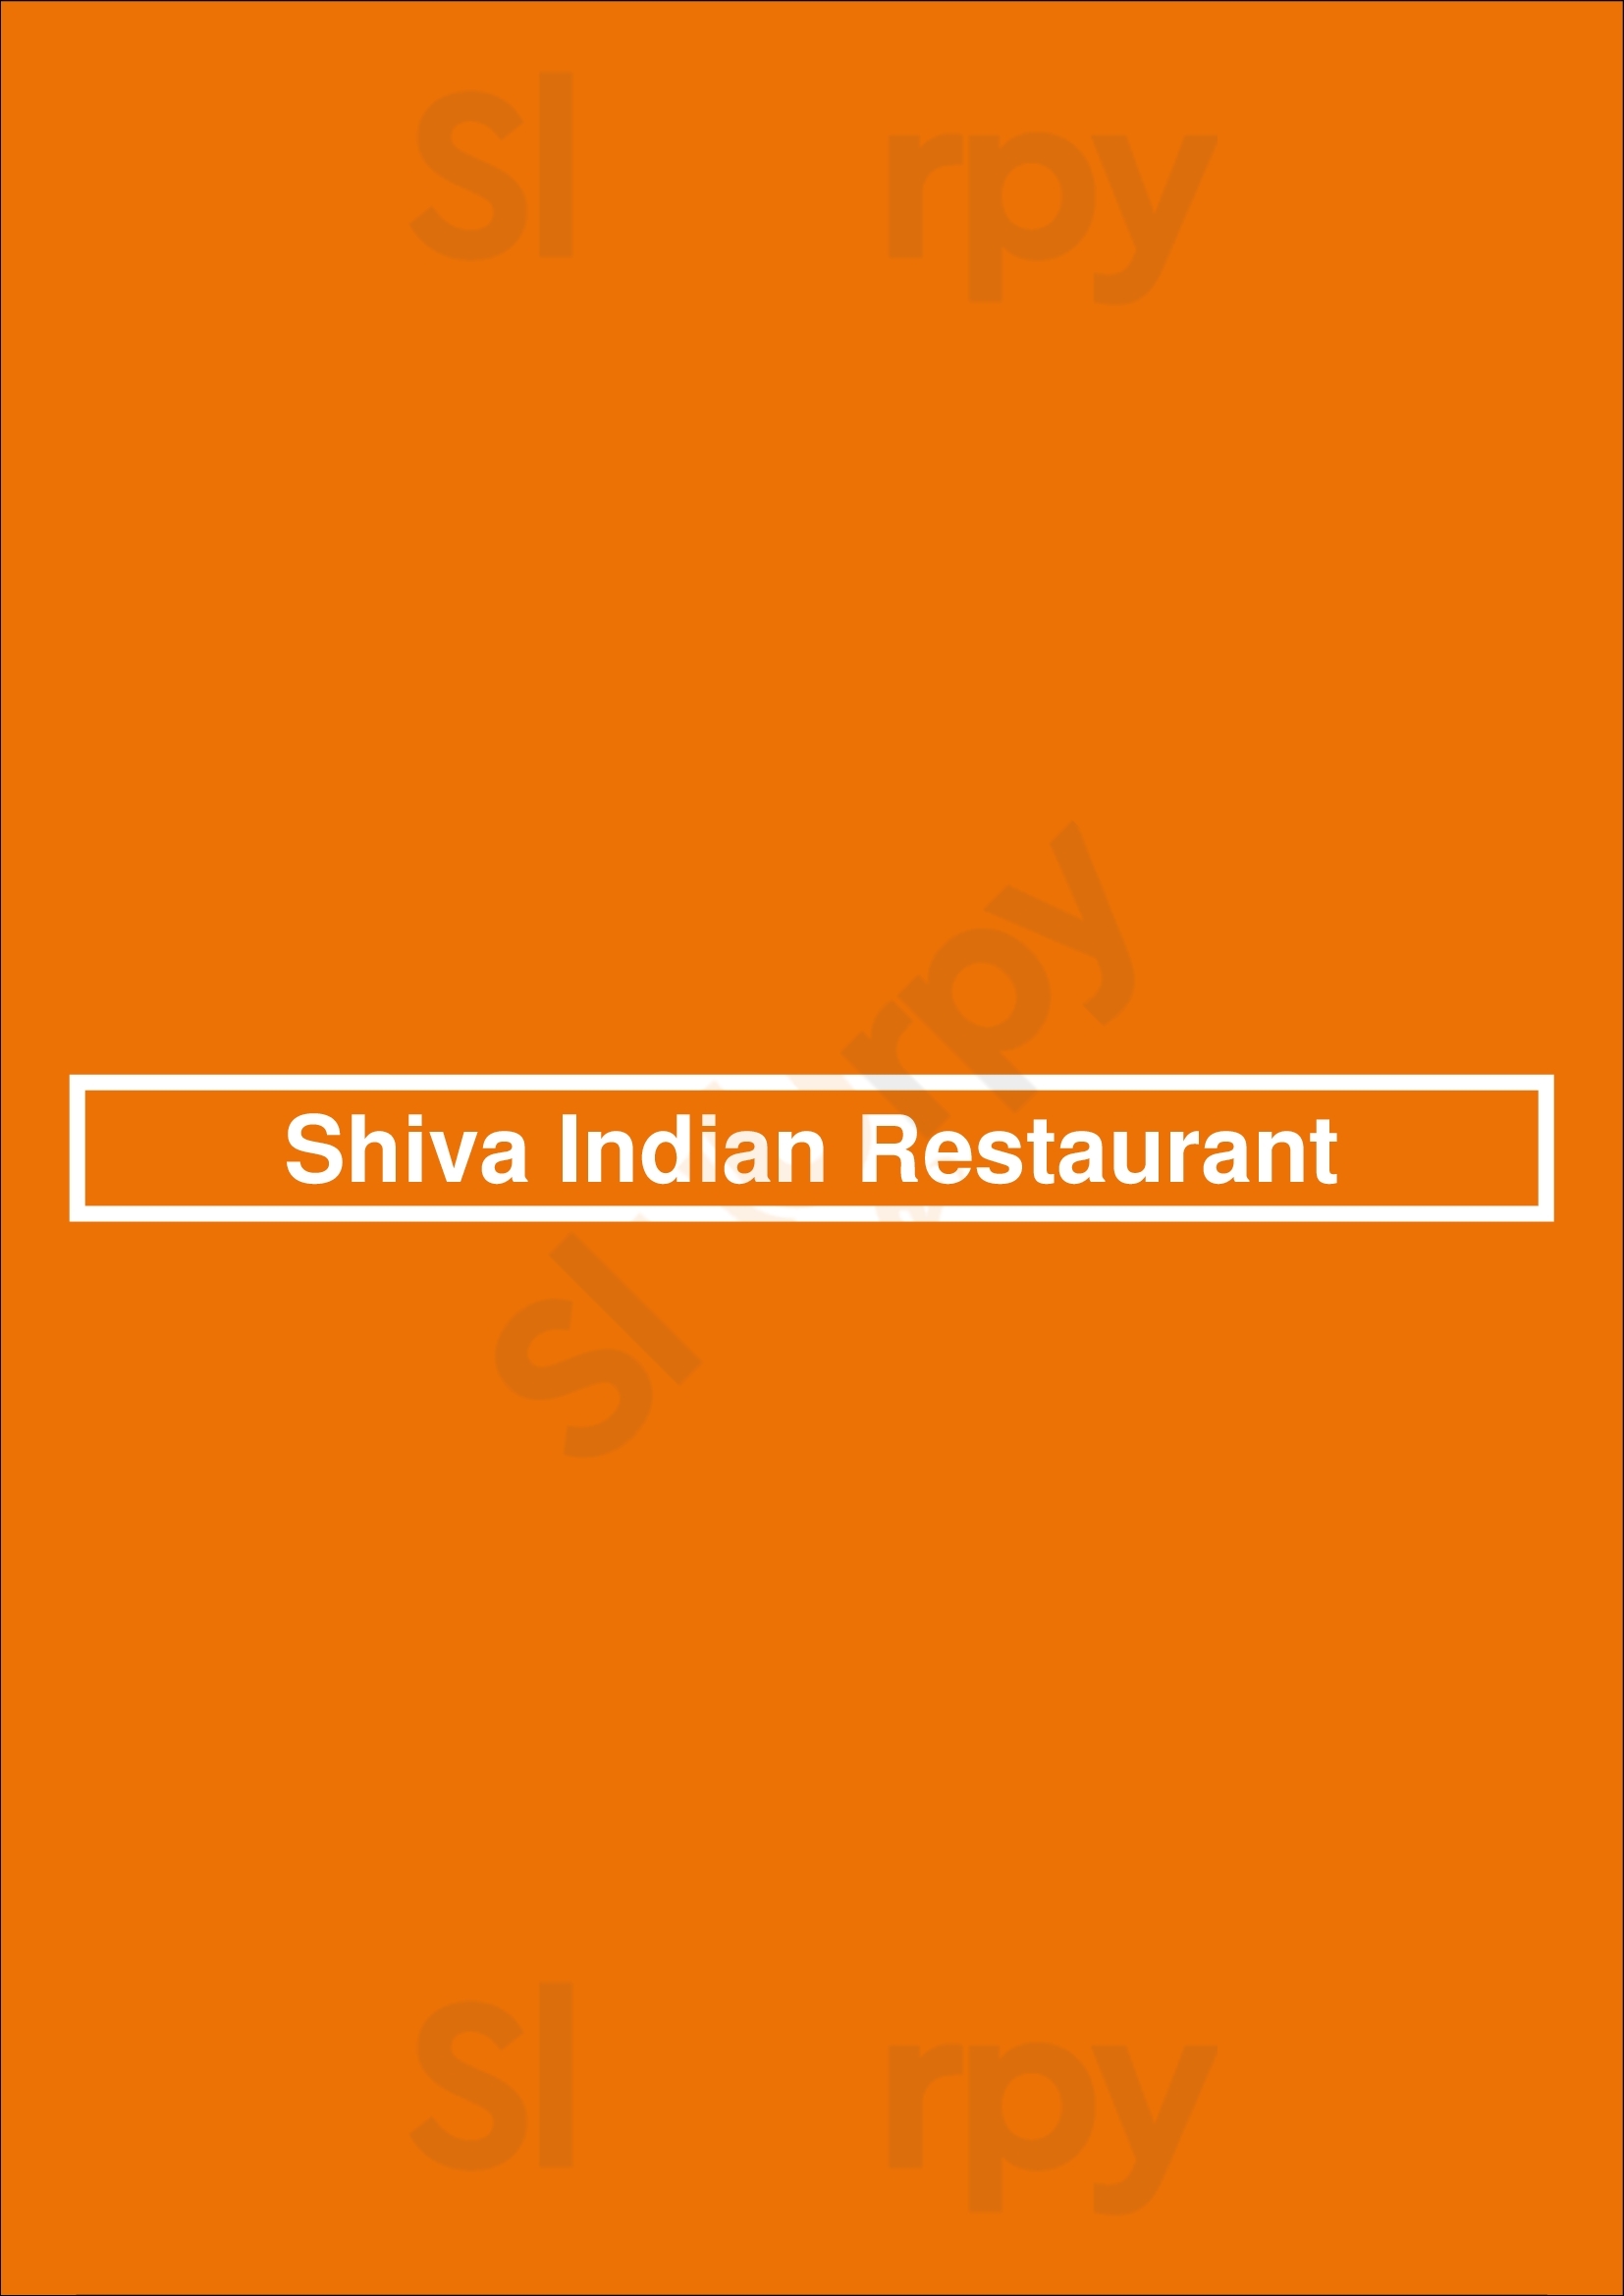 Shiva Indian Restaurant Amsterdam Menu - 1